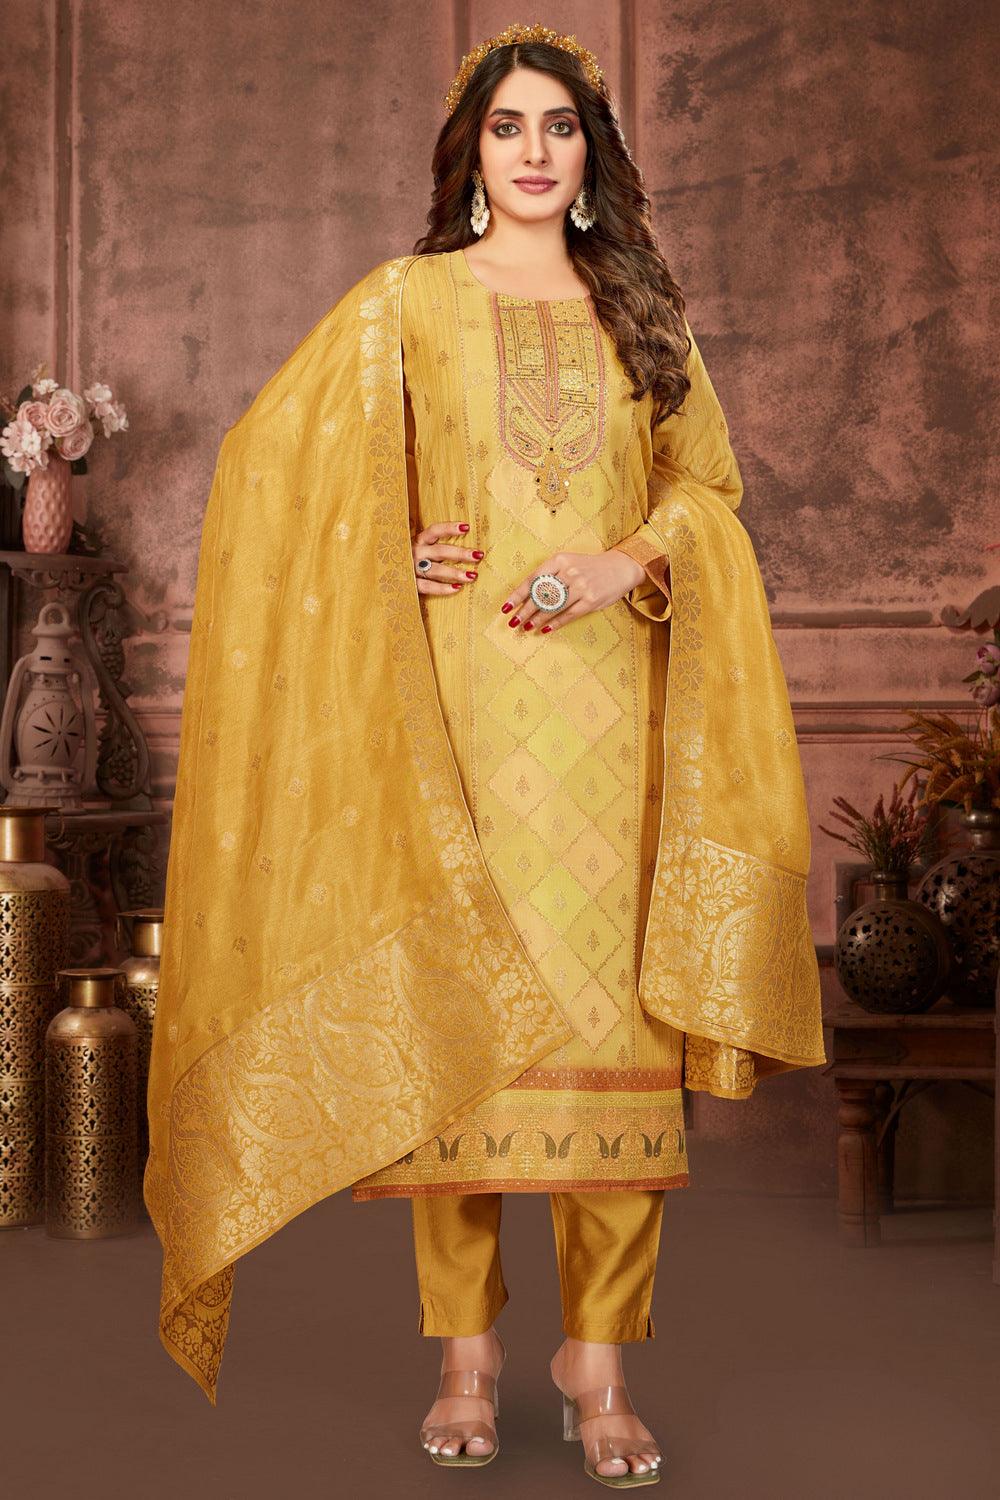 Golden Swati Fancy Wear Latest Stylist Designer Salwar Suit Collection 3405  - The Ethnic World